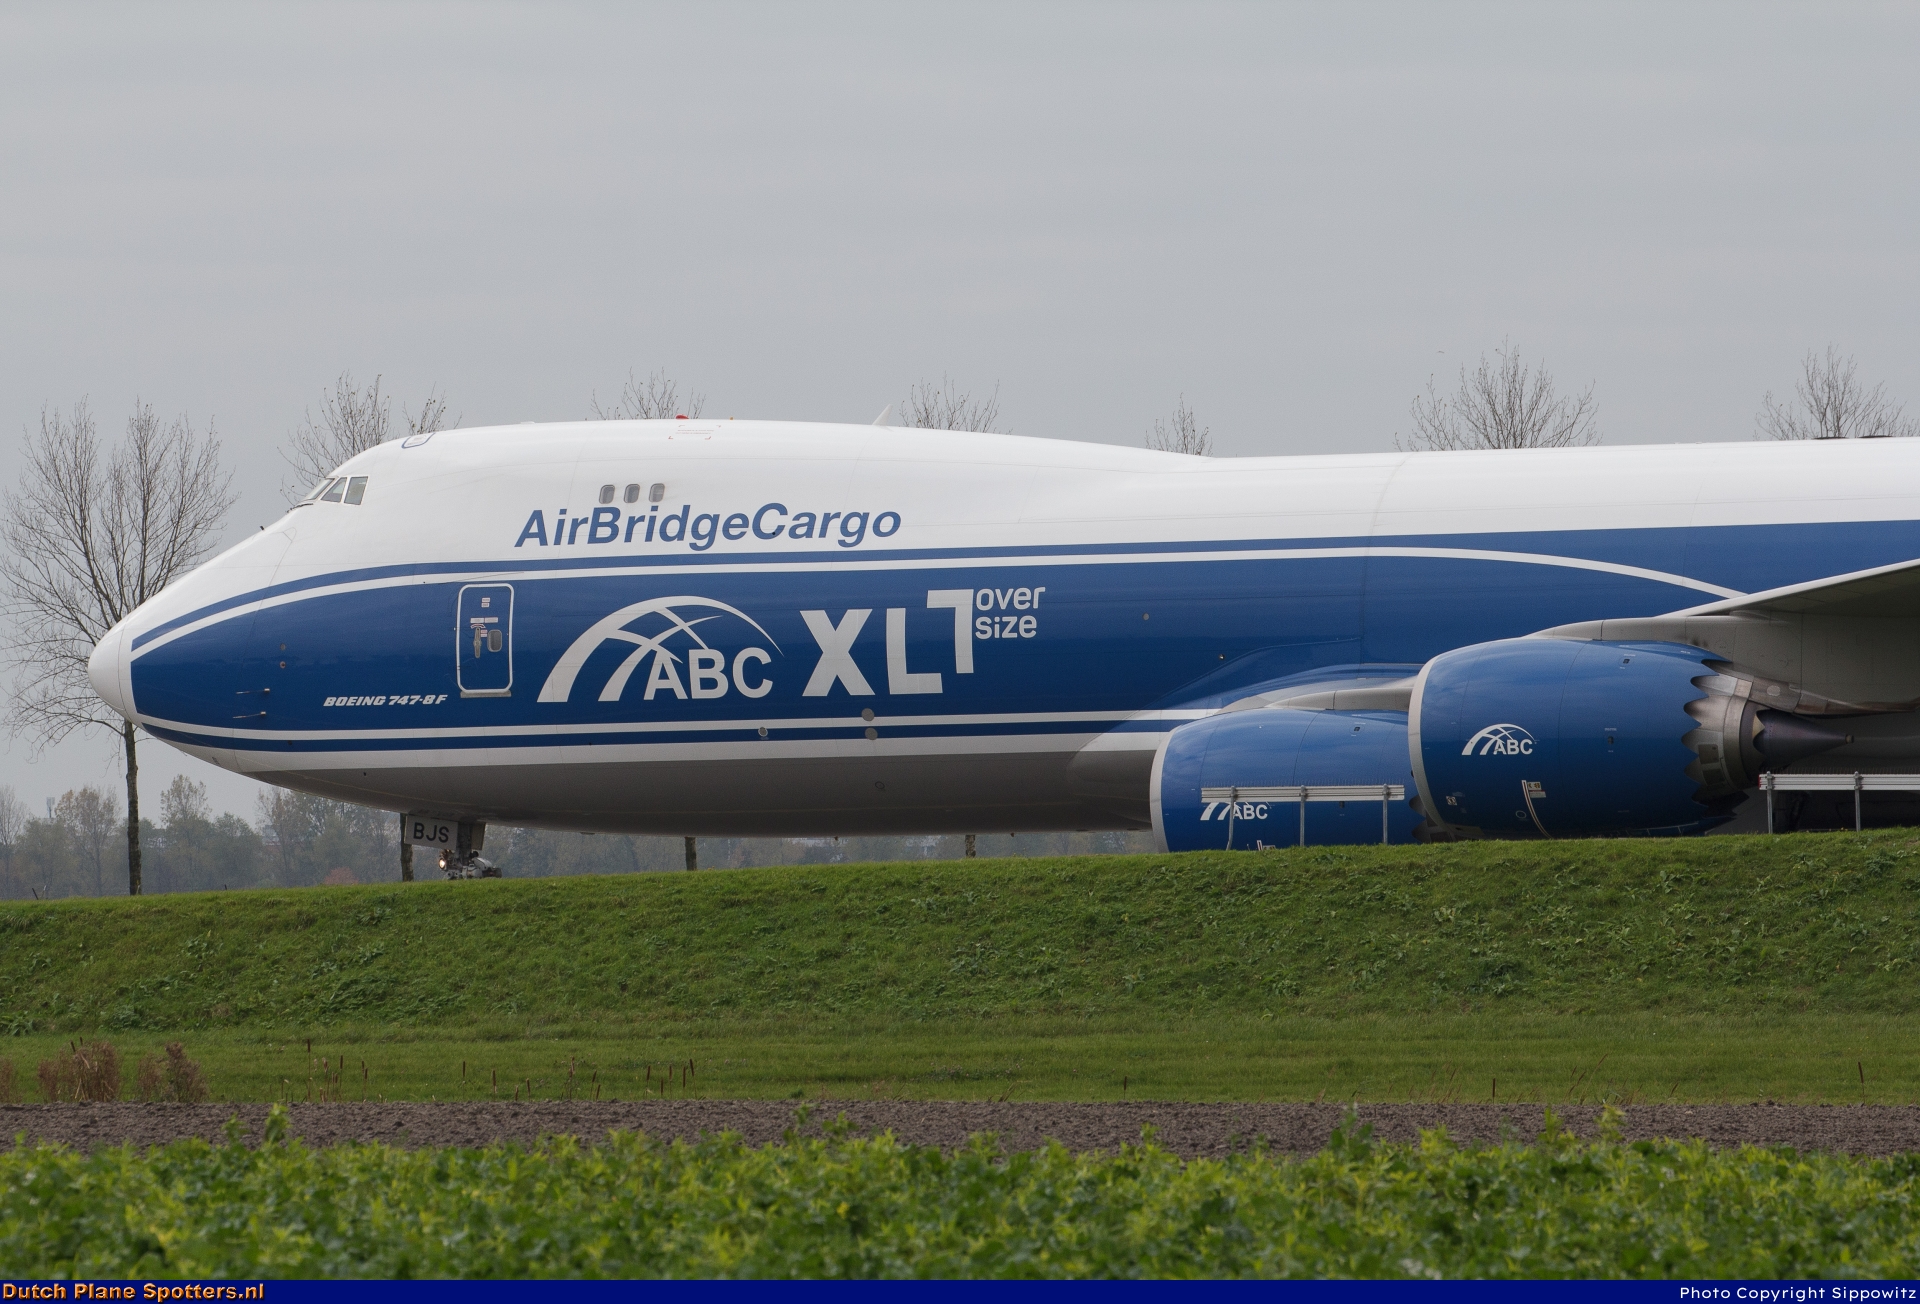 VP-BJS Boeing 747-8 AirBridgeCargo by Sippowitz